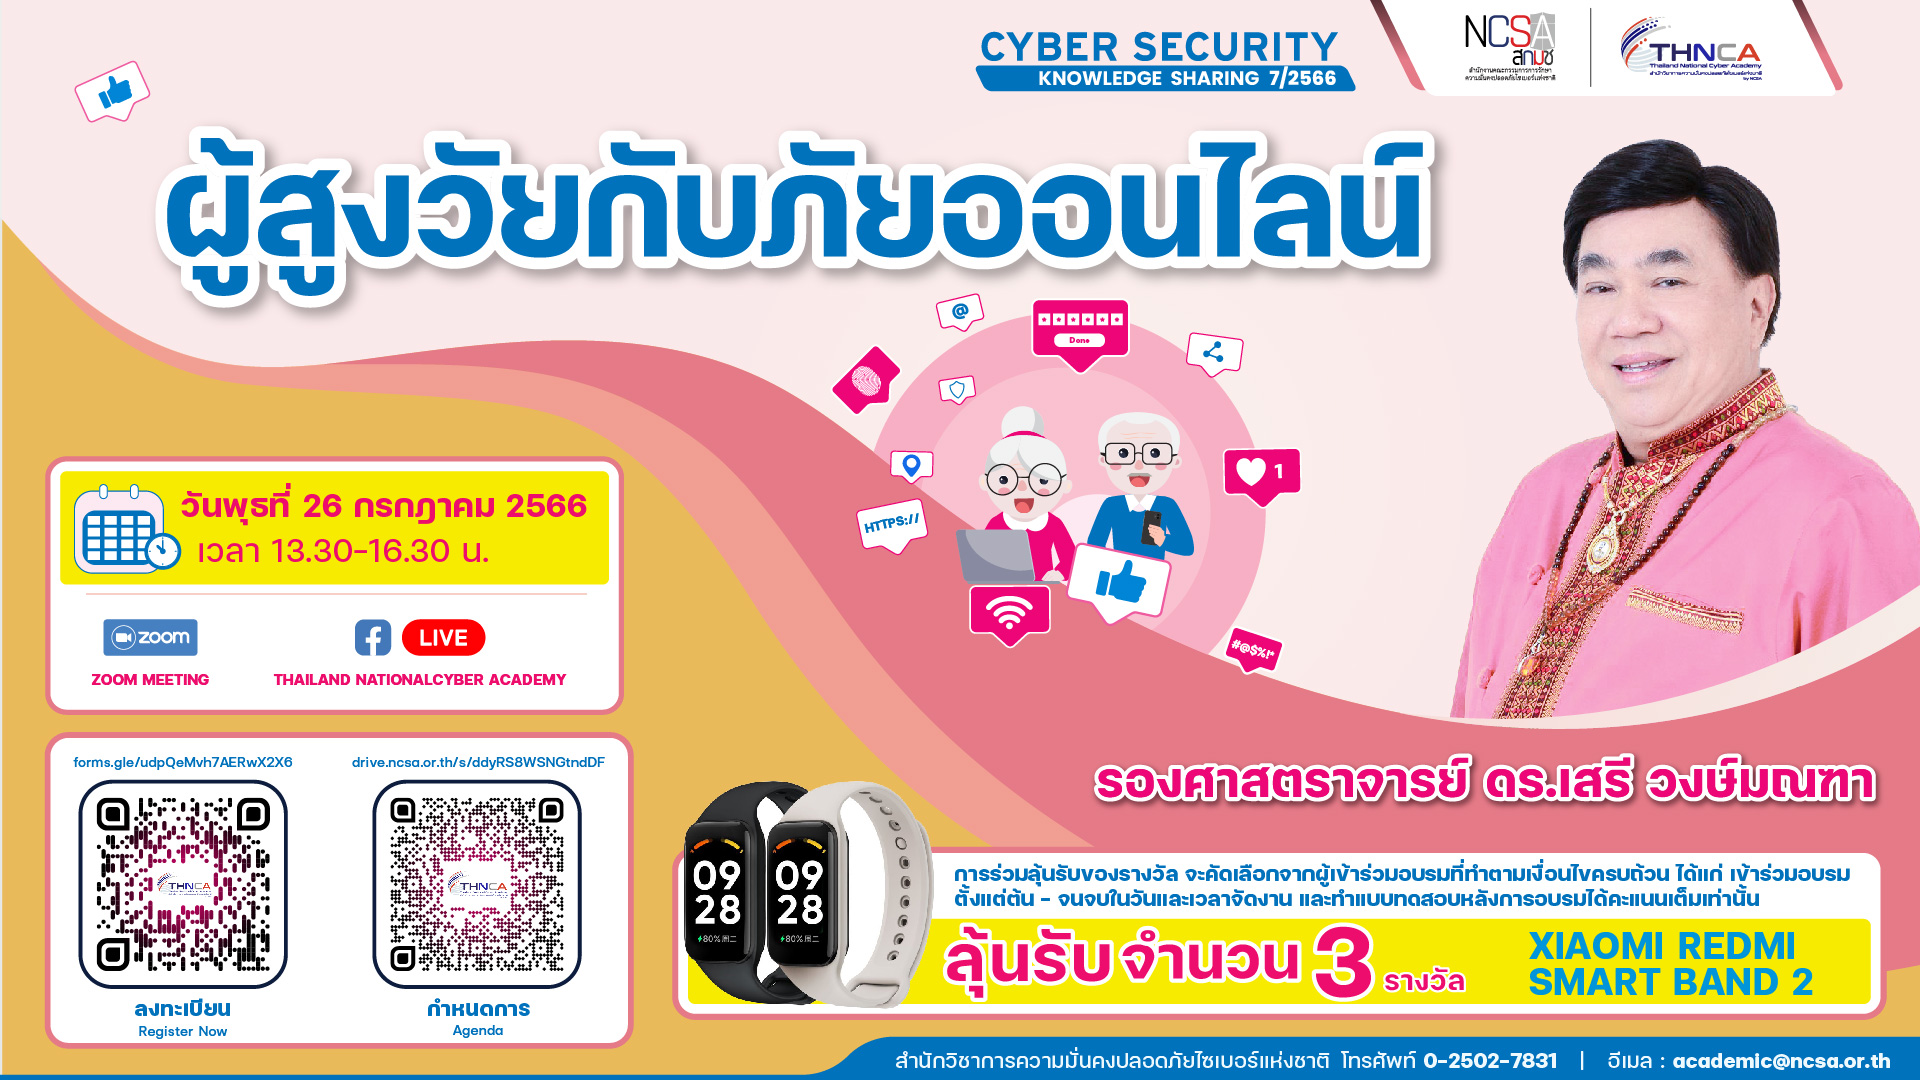 NCSA Cybersecurity Knowledge Sharing ครั้งที่ 7/2566 หัวข้อ “ผู้สูงวัยกับภัยออนไลน์”